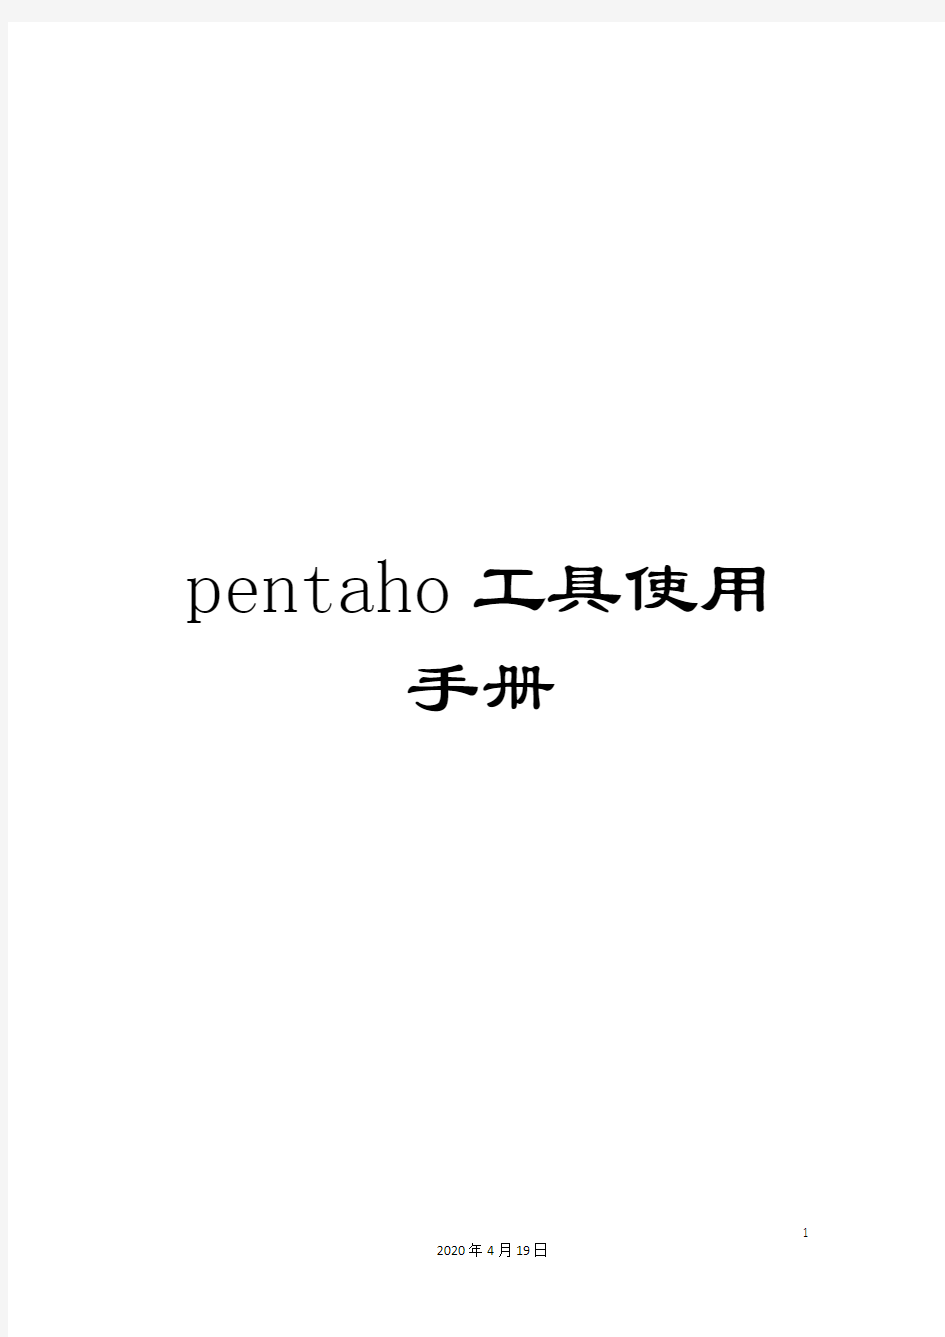 pentaho工具使用手册